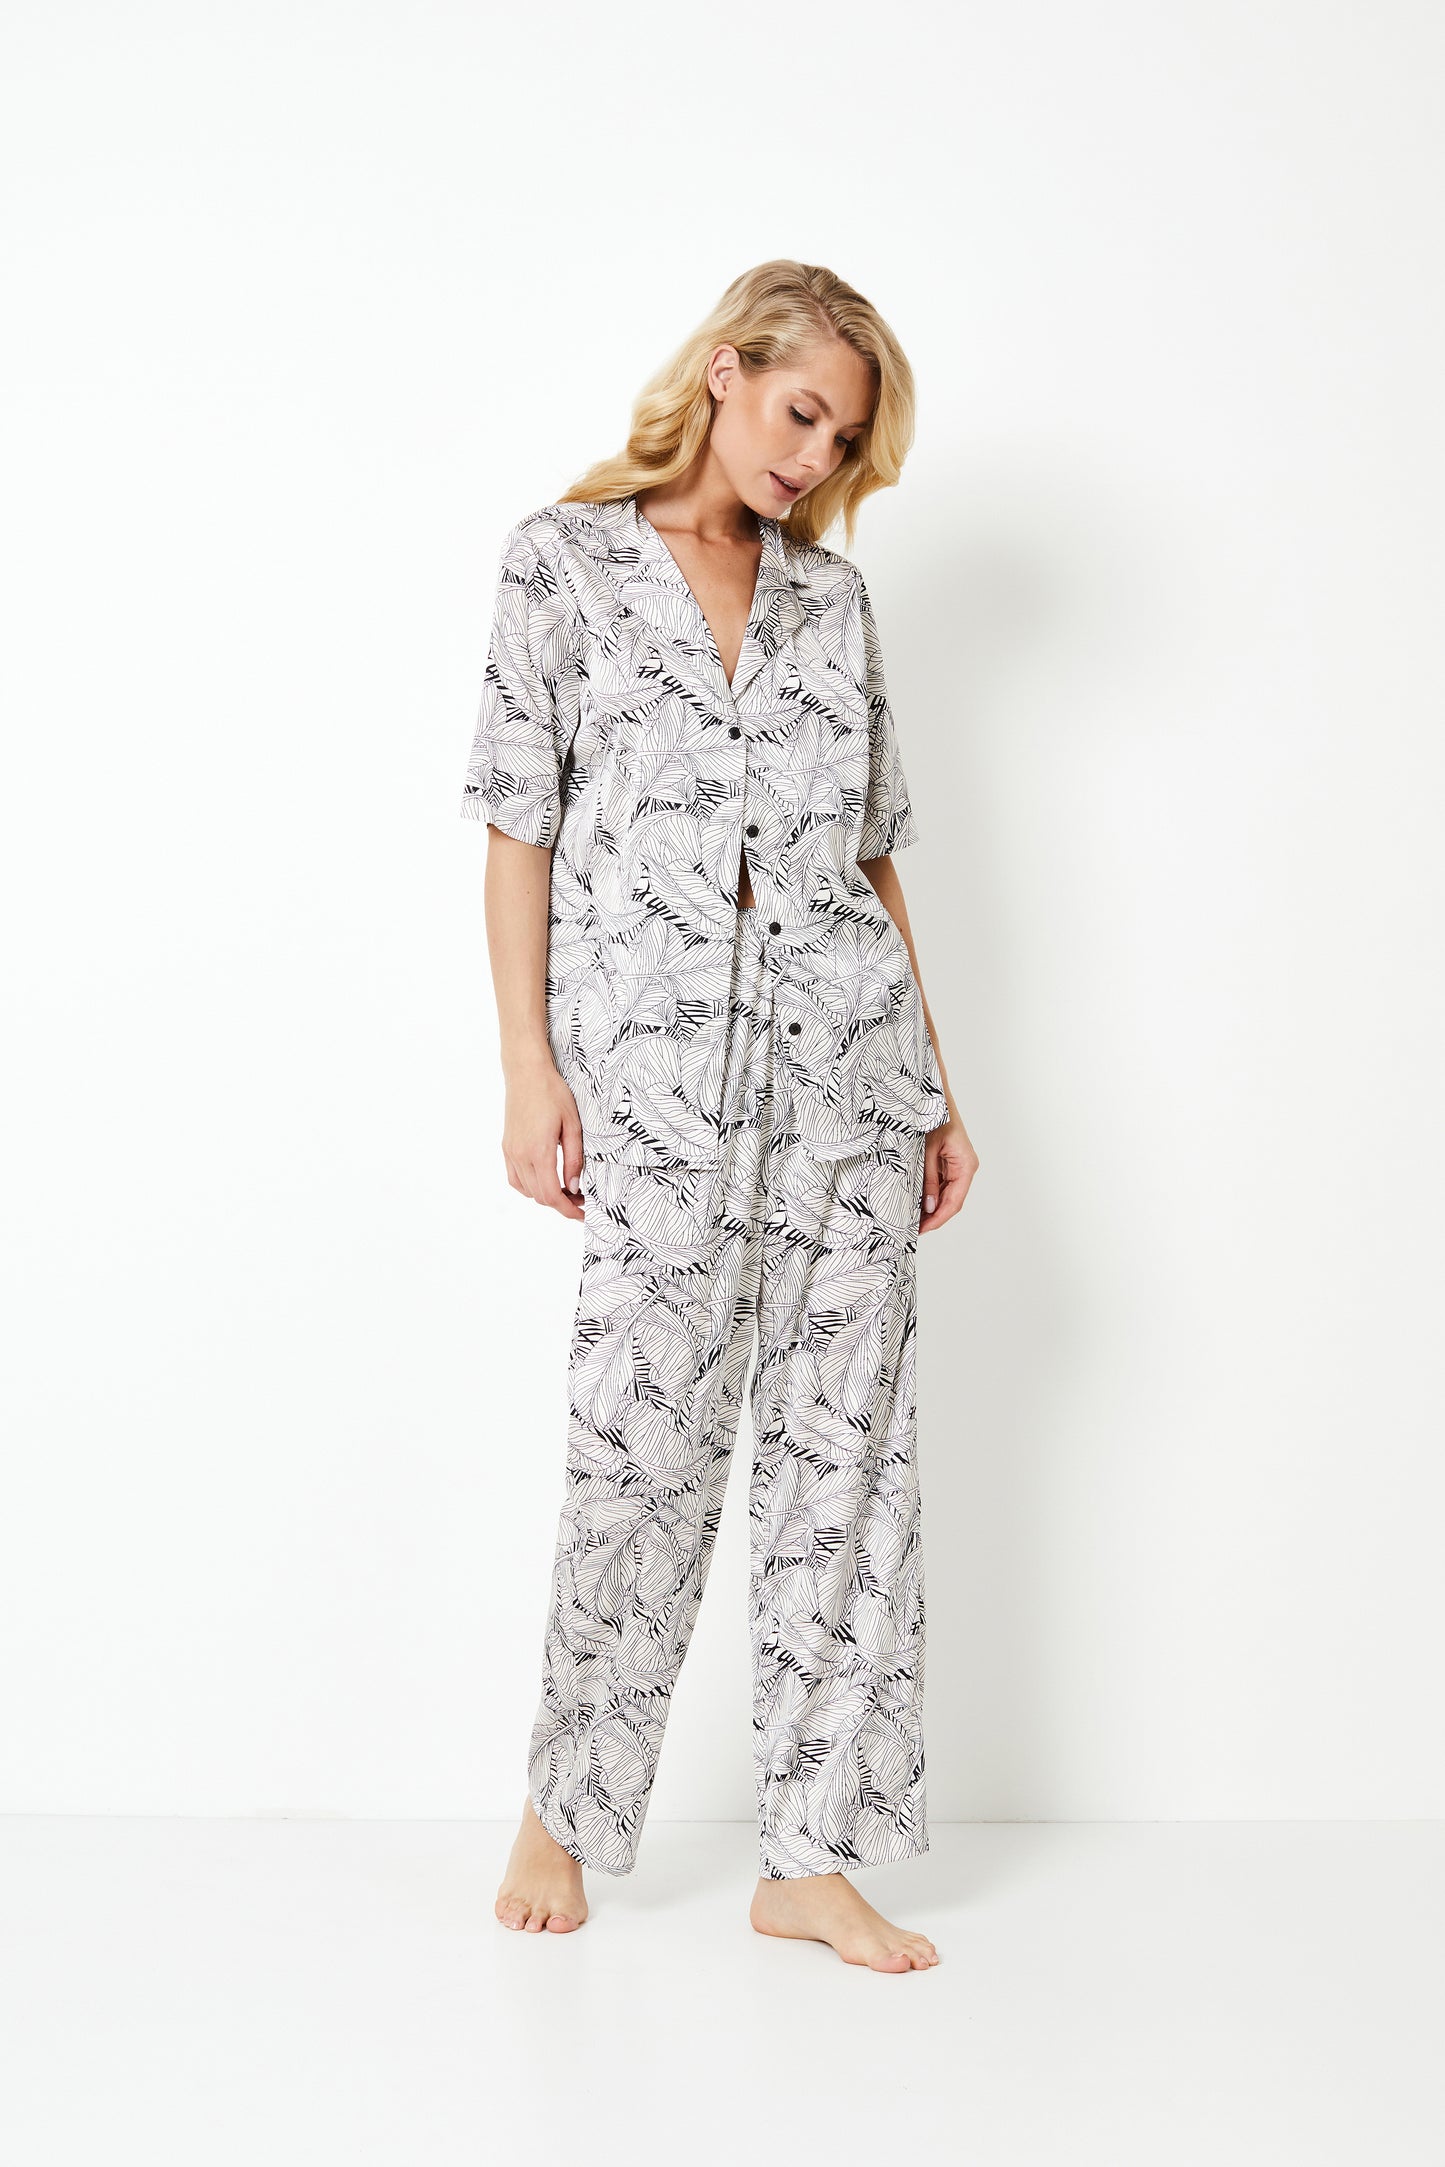 Aruelle Ladies Short Sleeve Pyjamas 'Klaudie' Black & White Leaf Print PJ Set